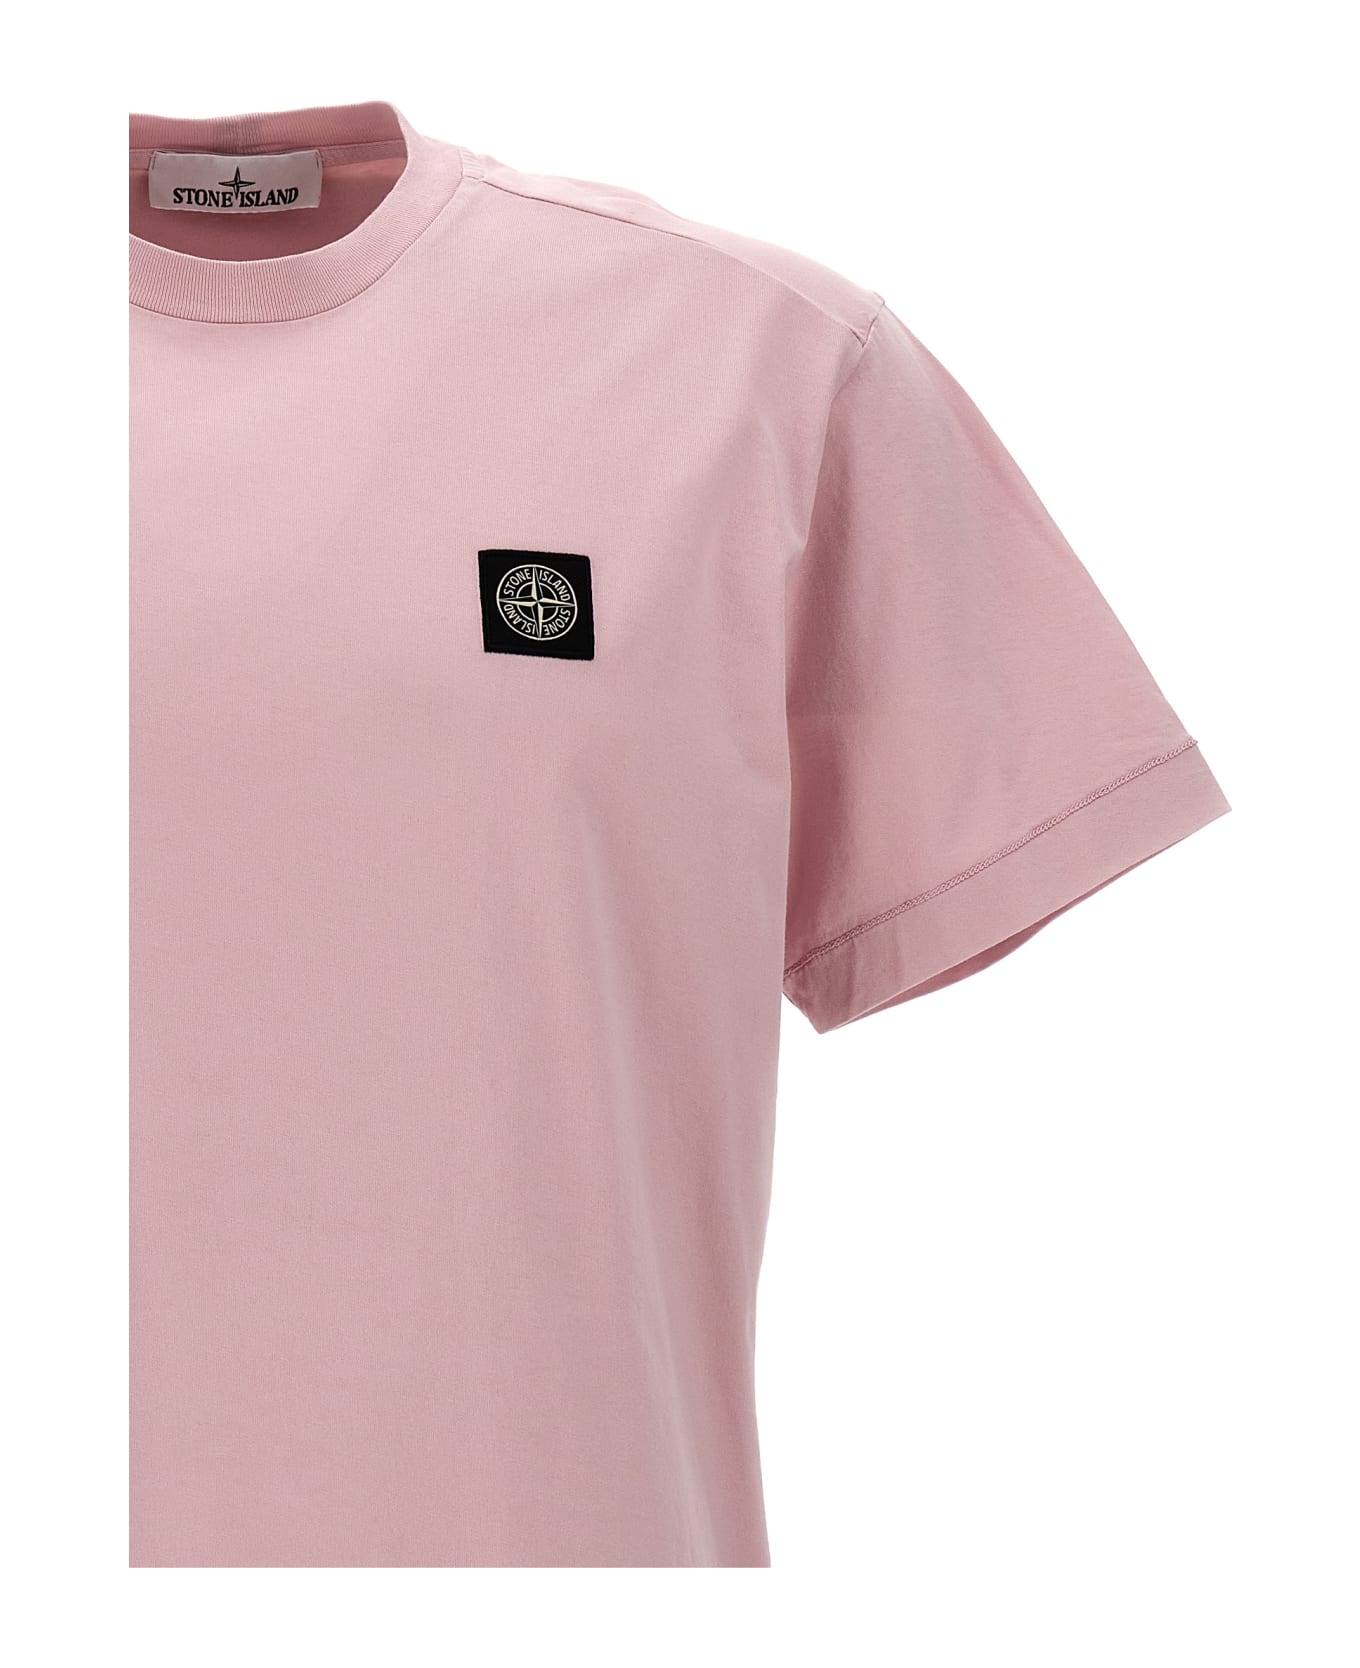 Stone Island Patch Tee T-shirt - Pink & Purple シャツ